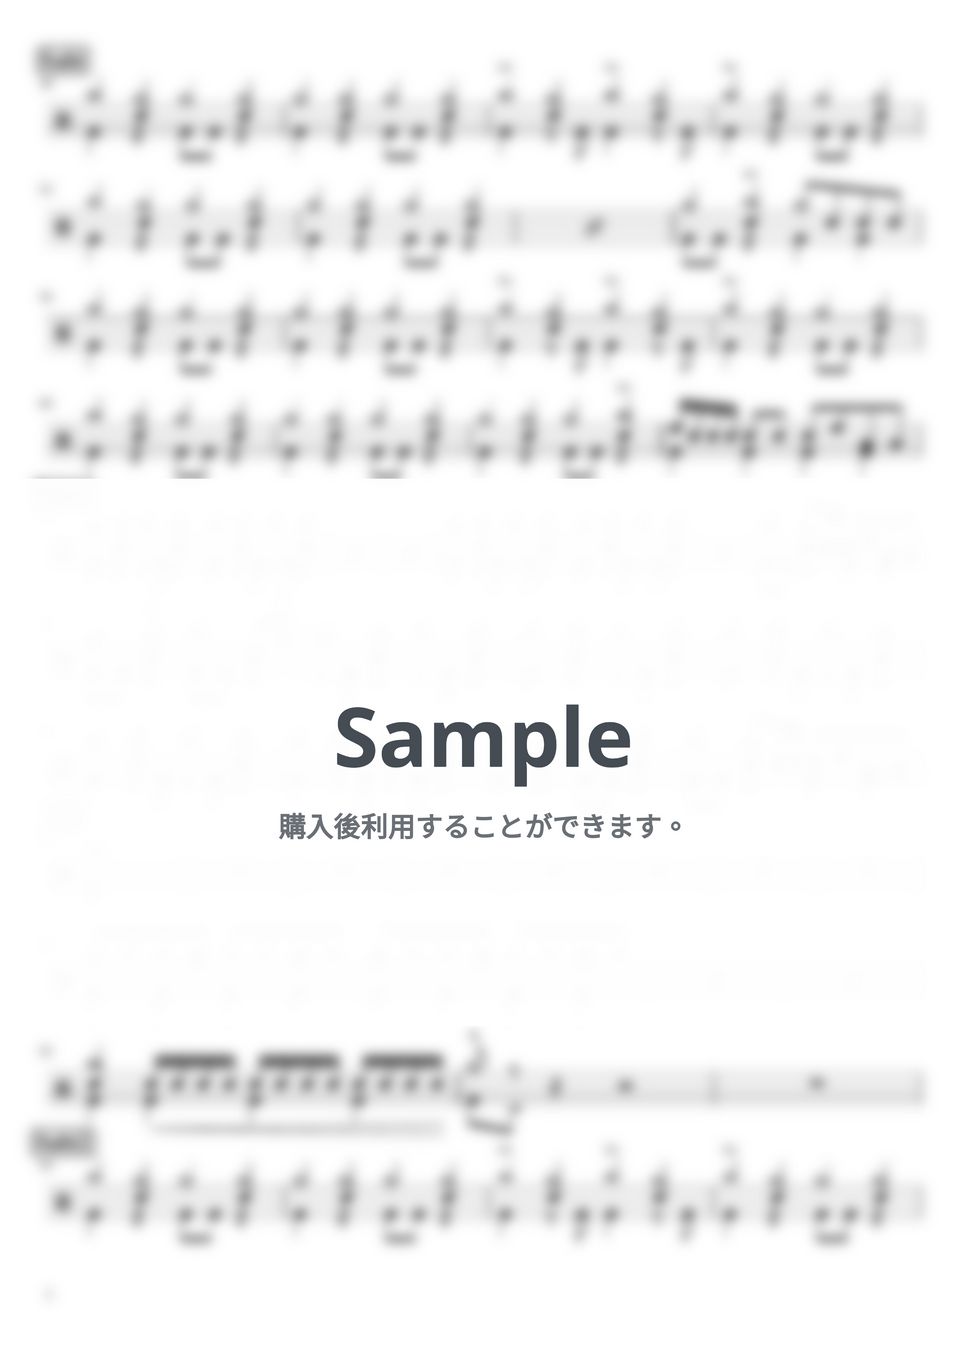 Hump Back - 拝啓、少年よ (ドラム譜面) by cabal